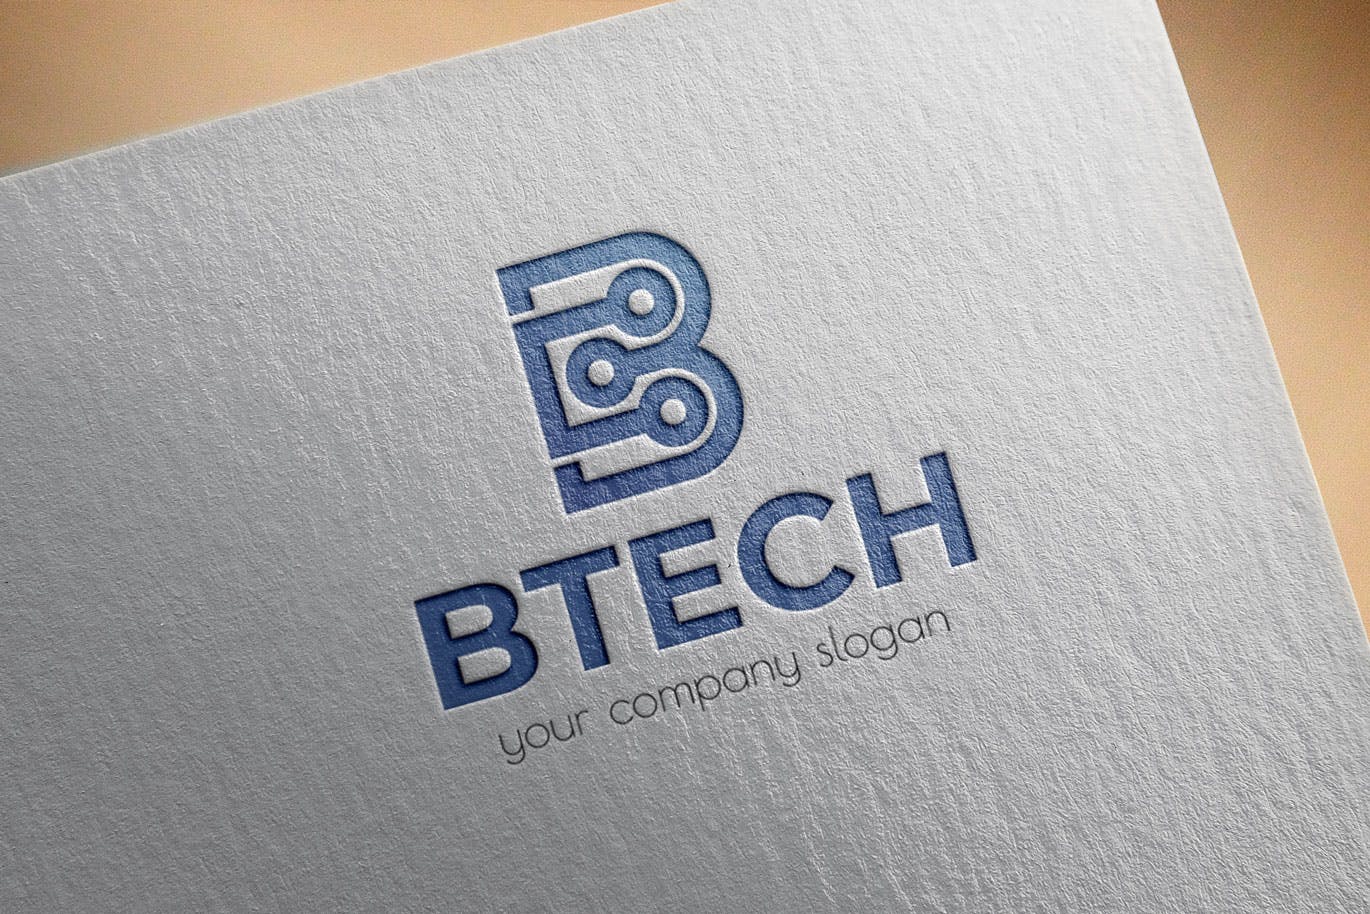 基于B字母图形的企业Logo设计素材库精选模板 Letter Based Business Logo Template插图(2)